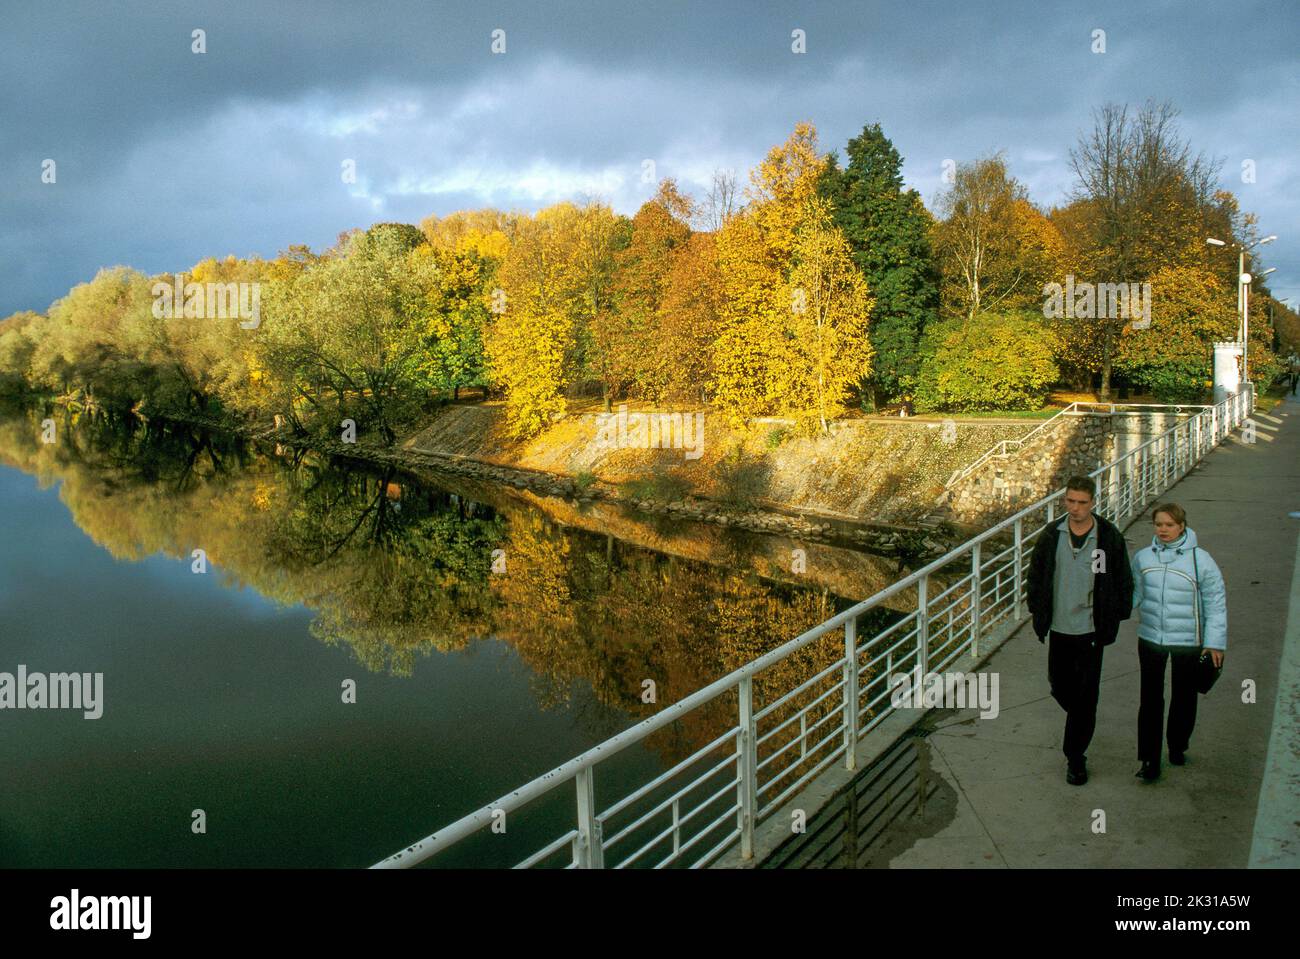 Strolling across the Emajogi River at Tartu, Estonia on an autumn evening Stock Photo